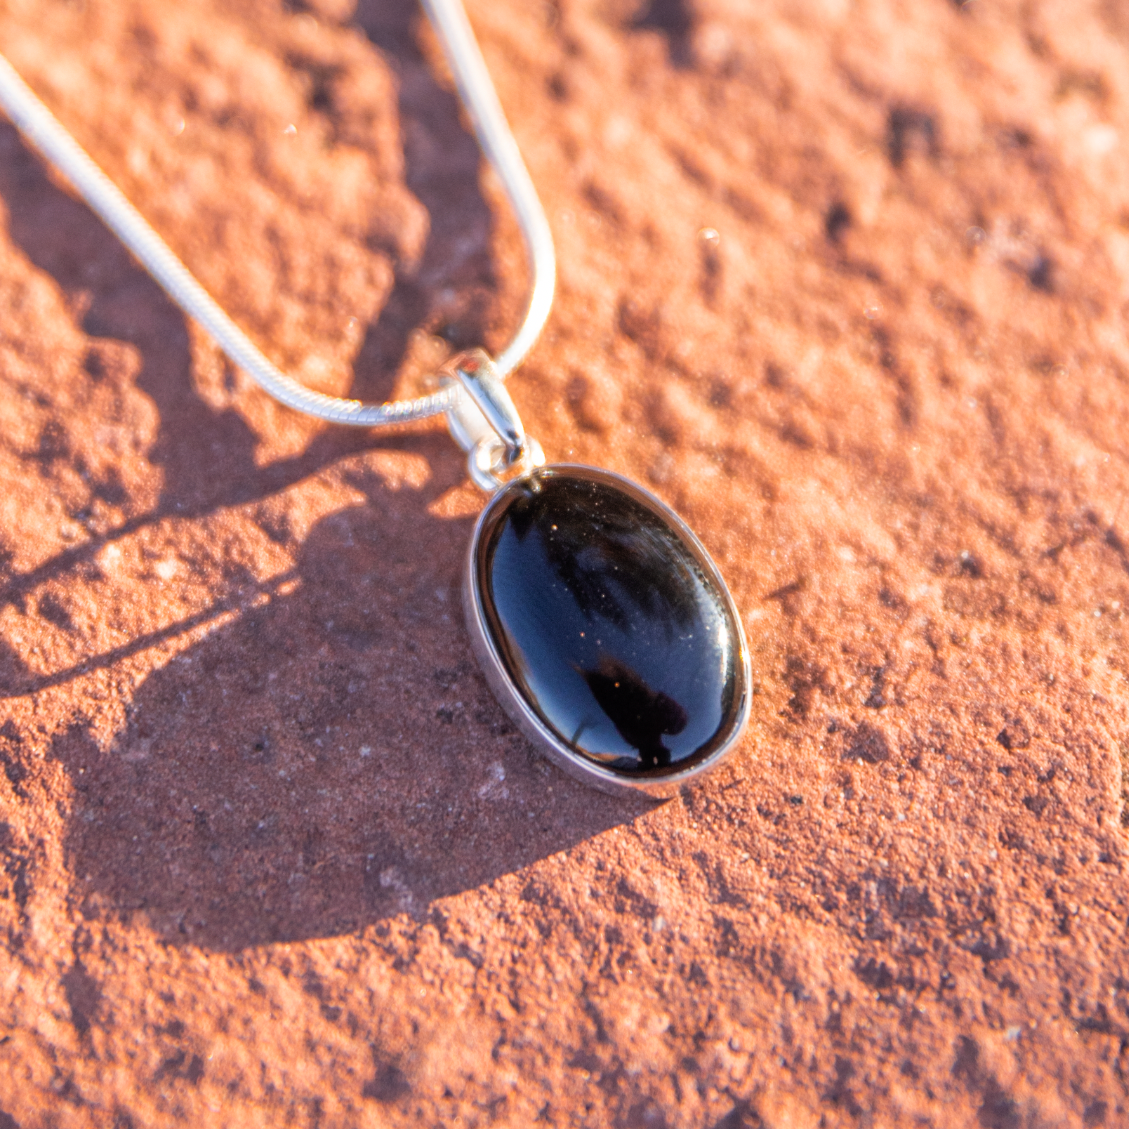 crystal jewelry: onyx pendant in sedona, arizona used for energy healing